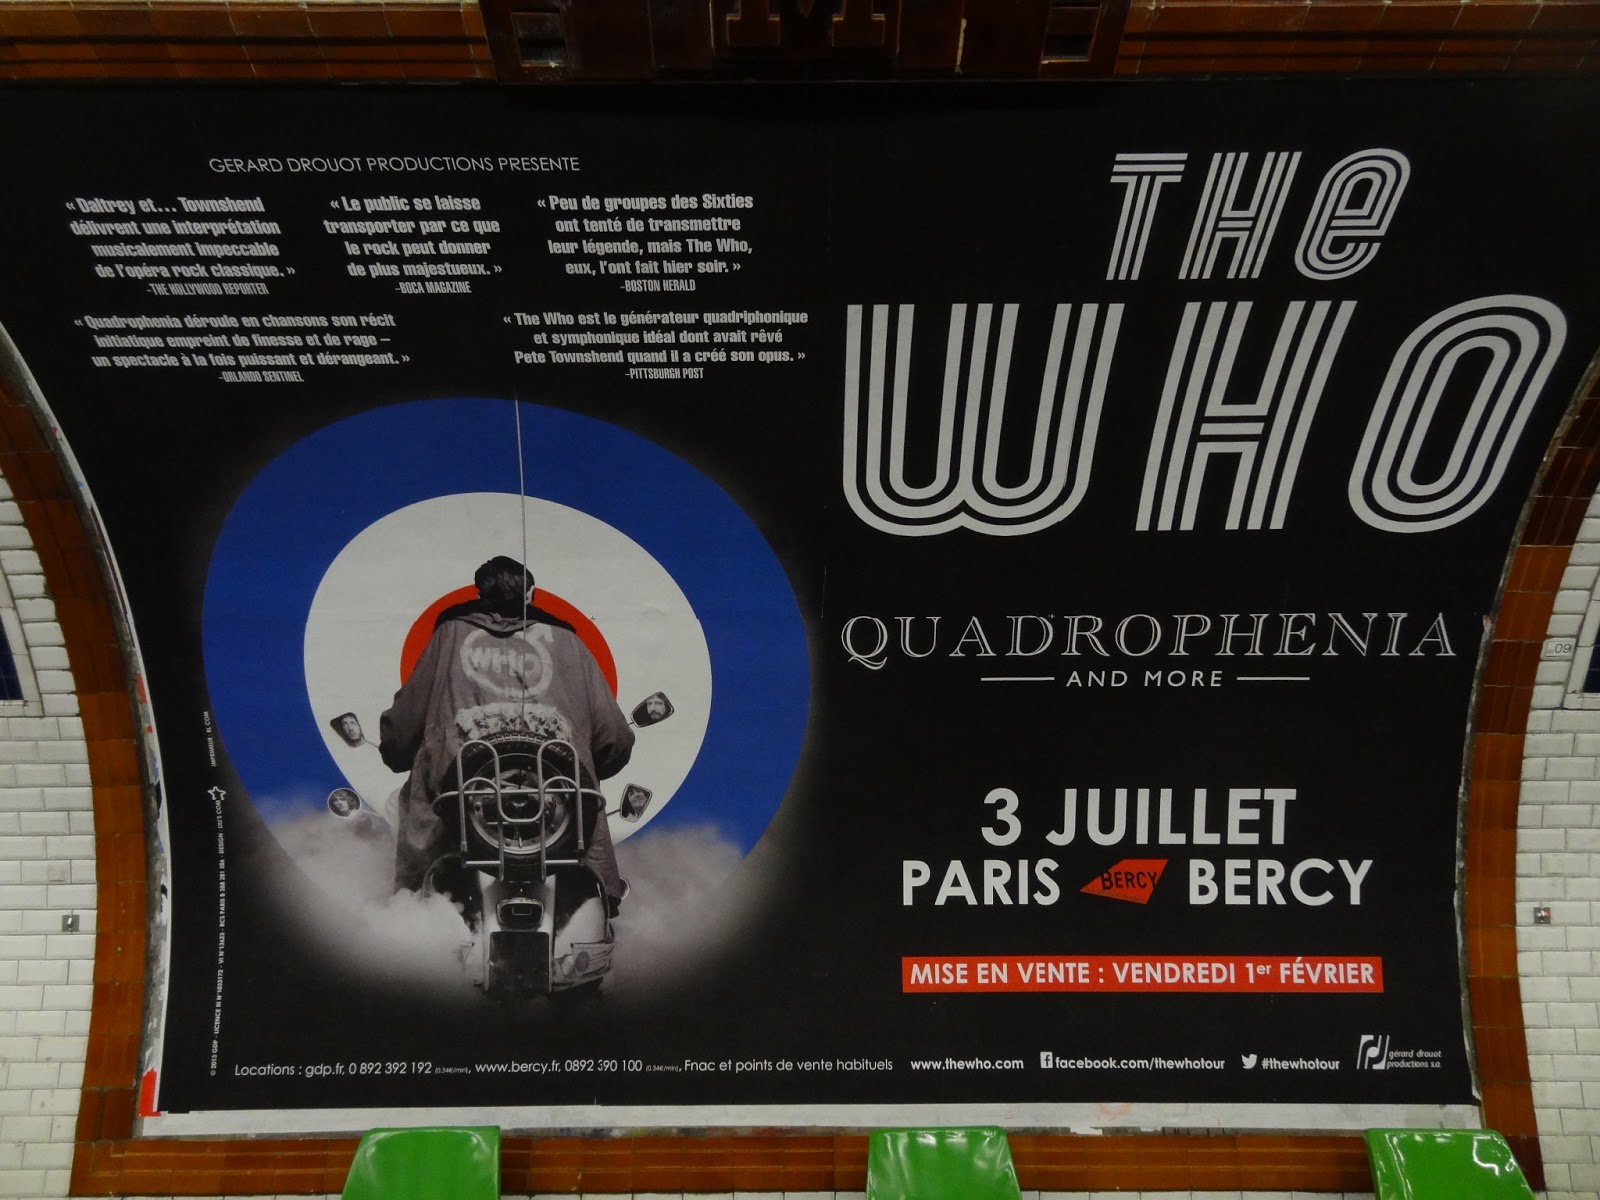 Concerts : Juillet 2013 Affiche+the+who+bercy+2013+(5)copie